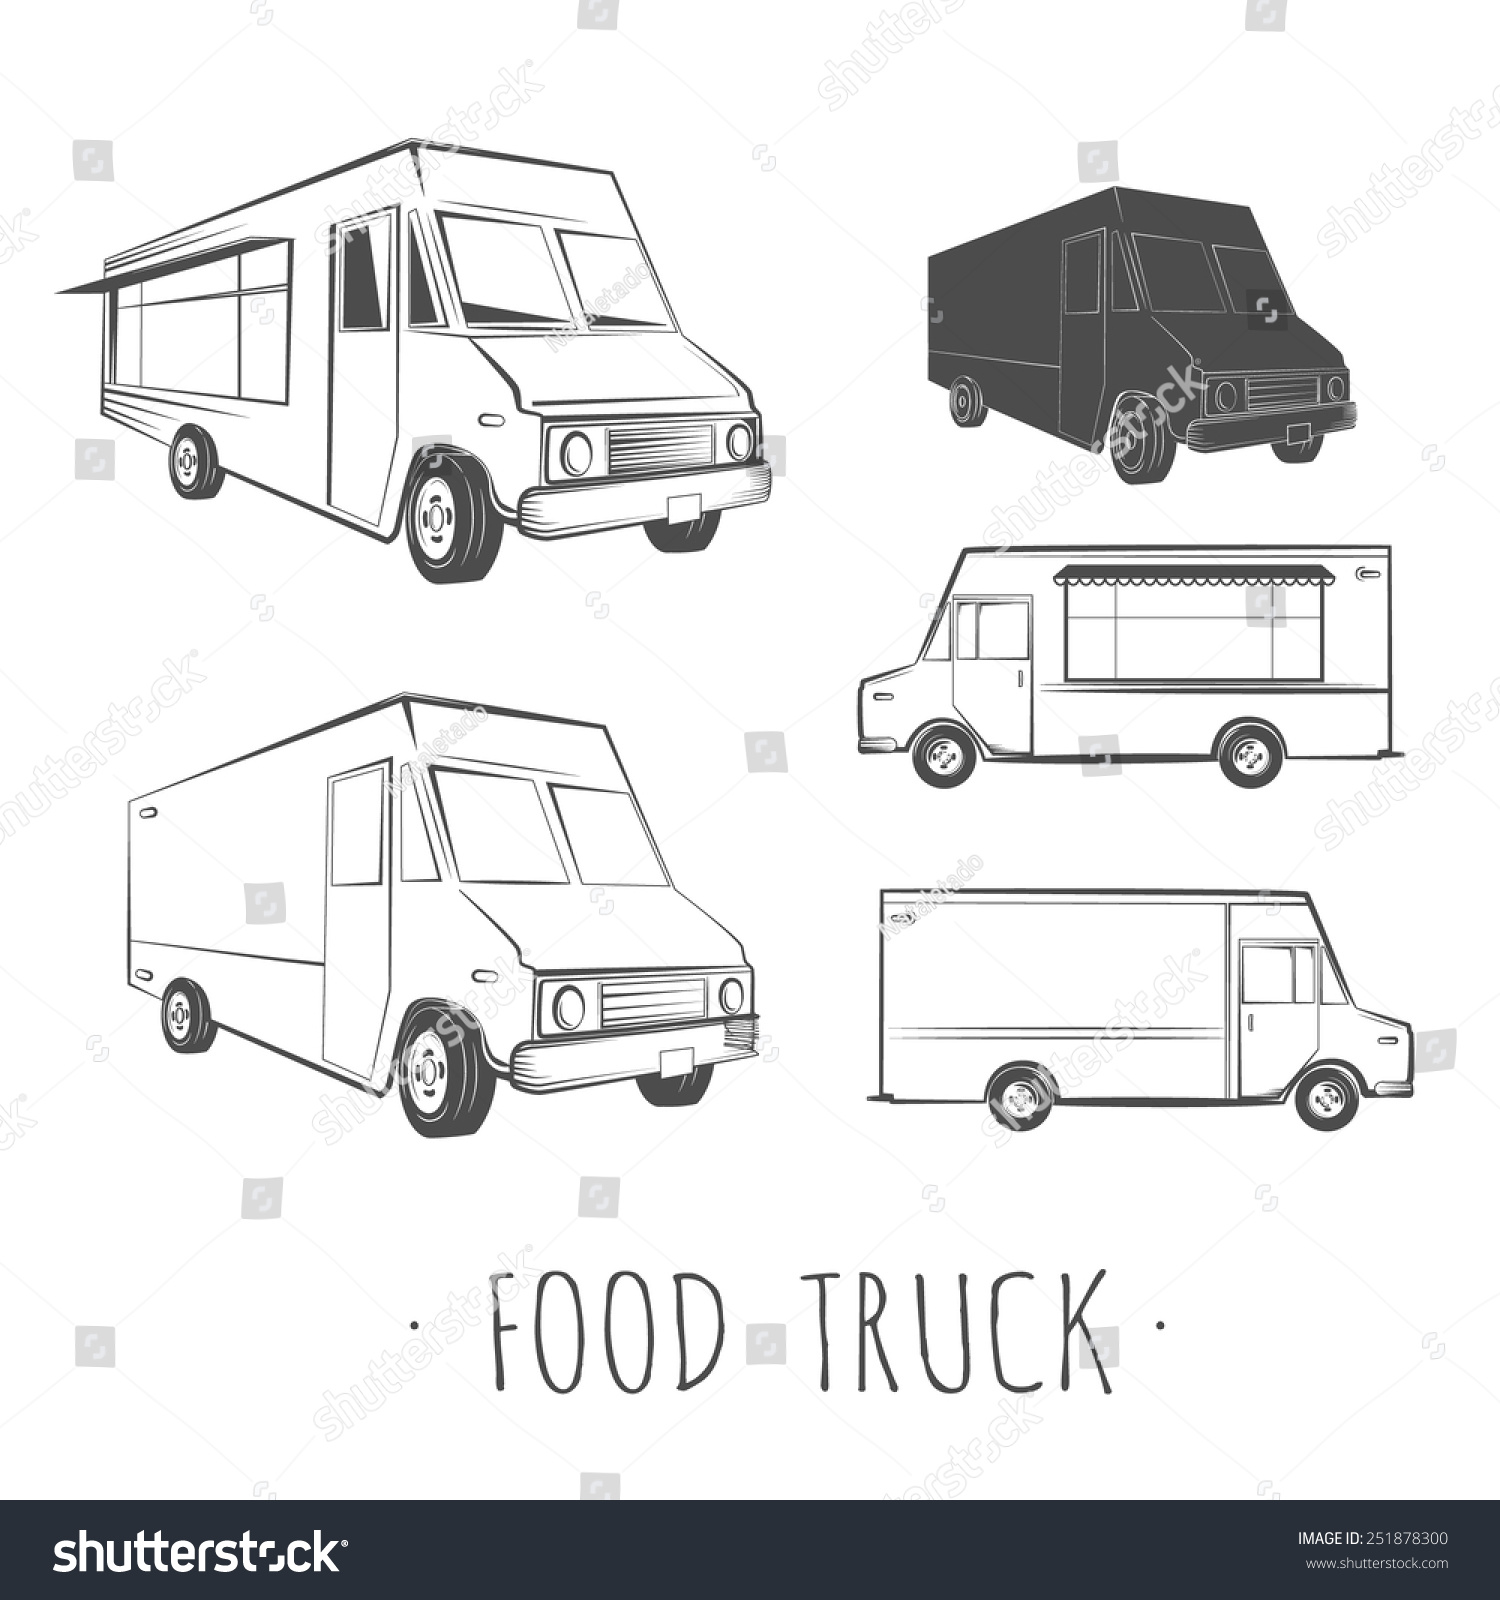 food-truck-blank-stock-vector-illustration-251878300-shutterstock